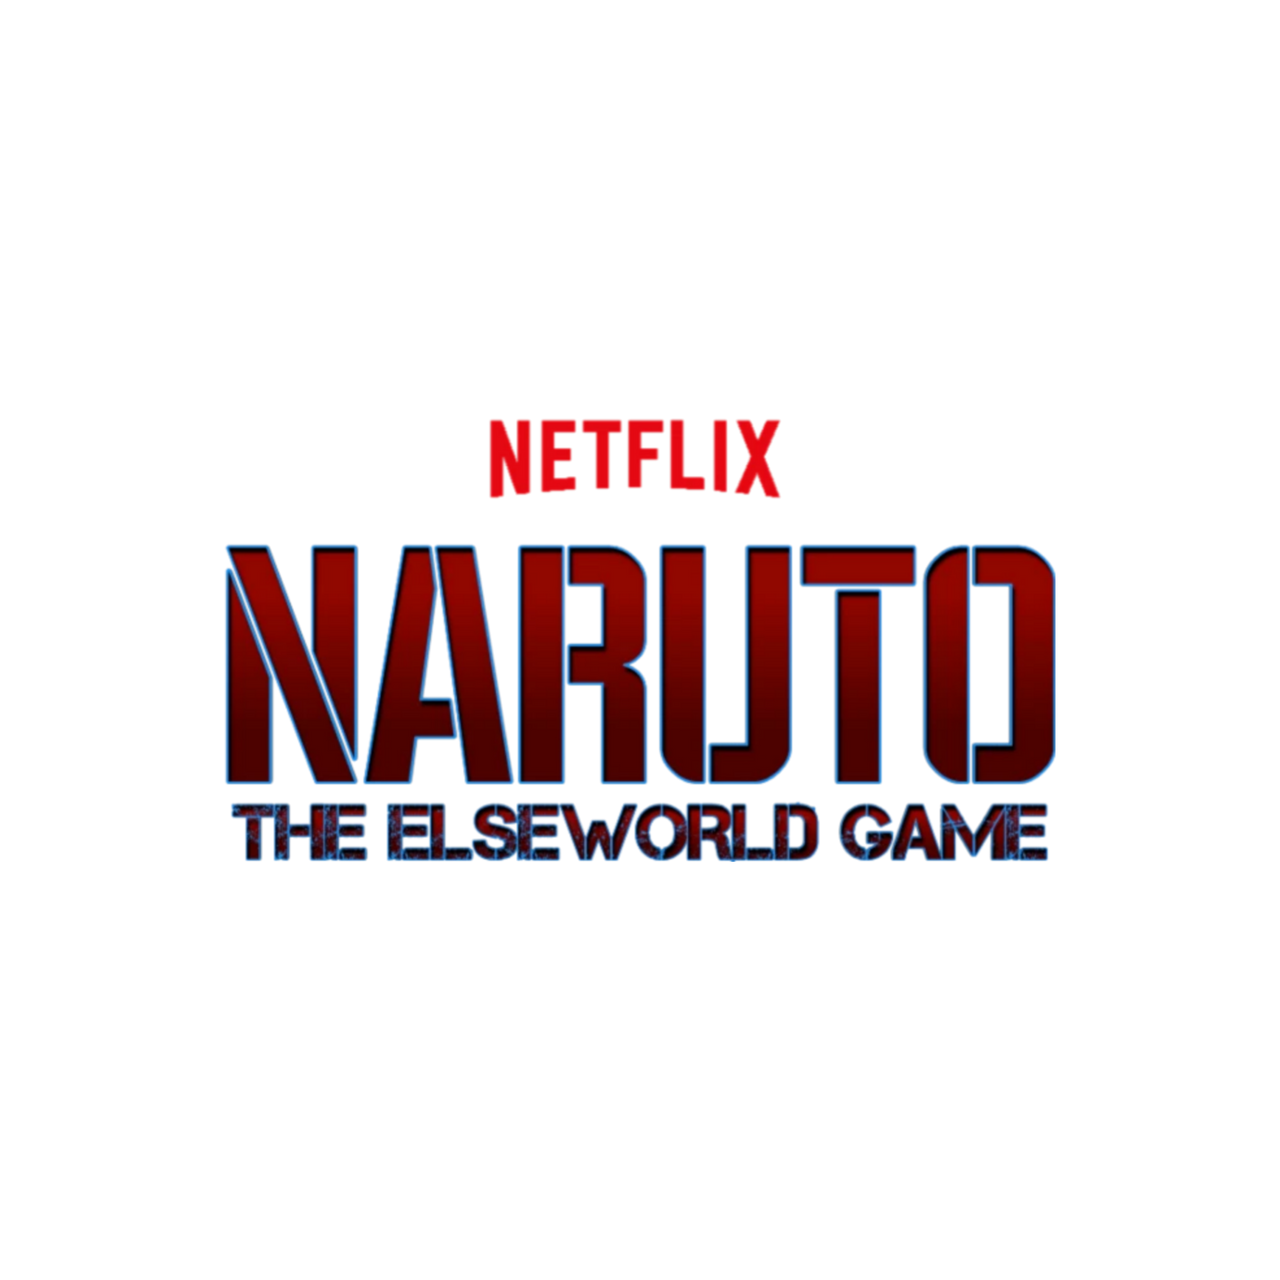 What If Naruto Shippuden Was On Netflix? by KayloshiWarrior on DeviantArt